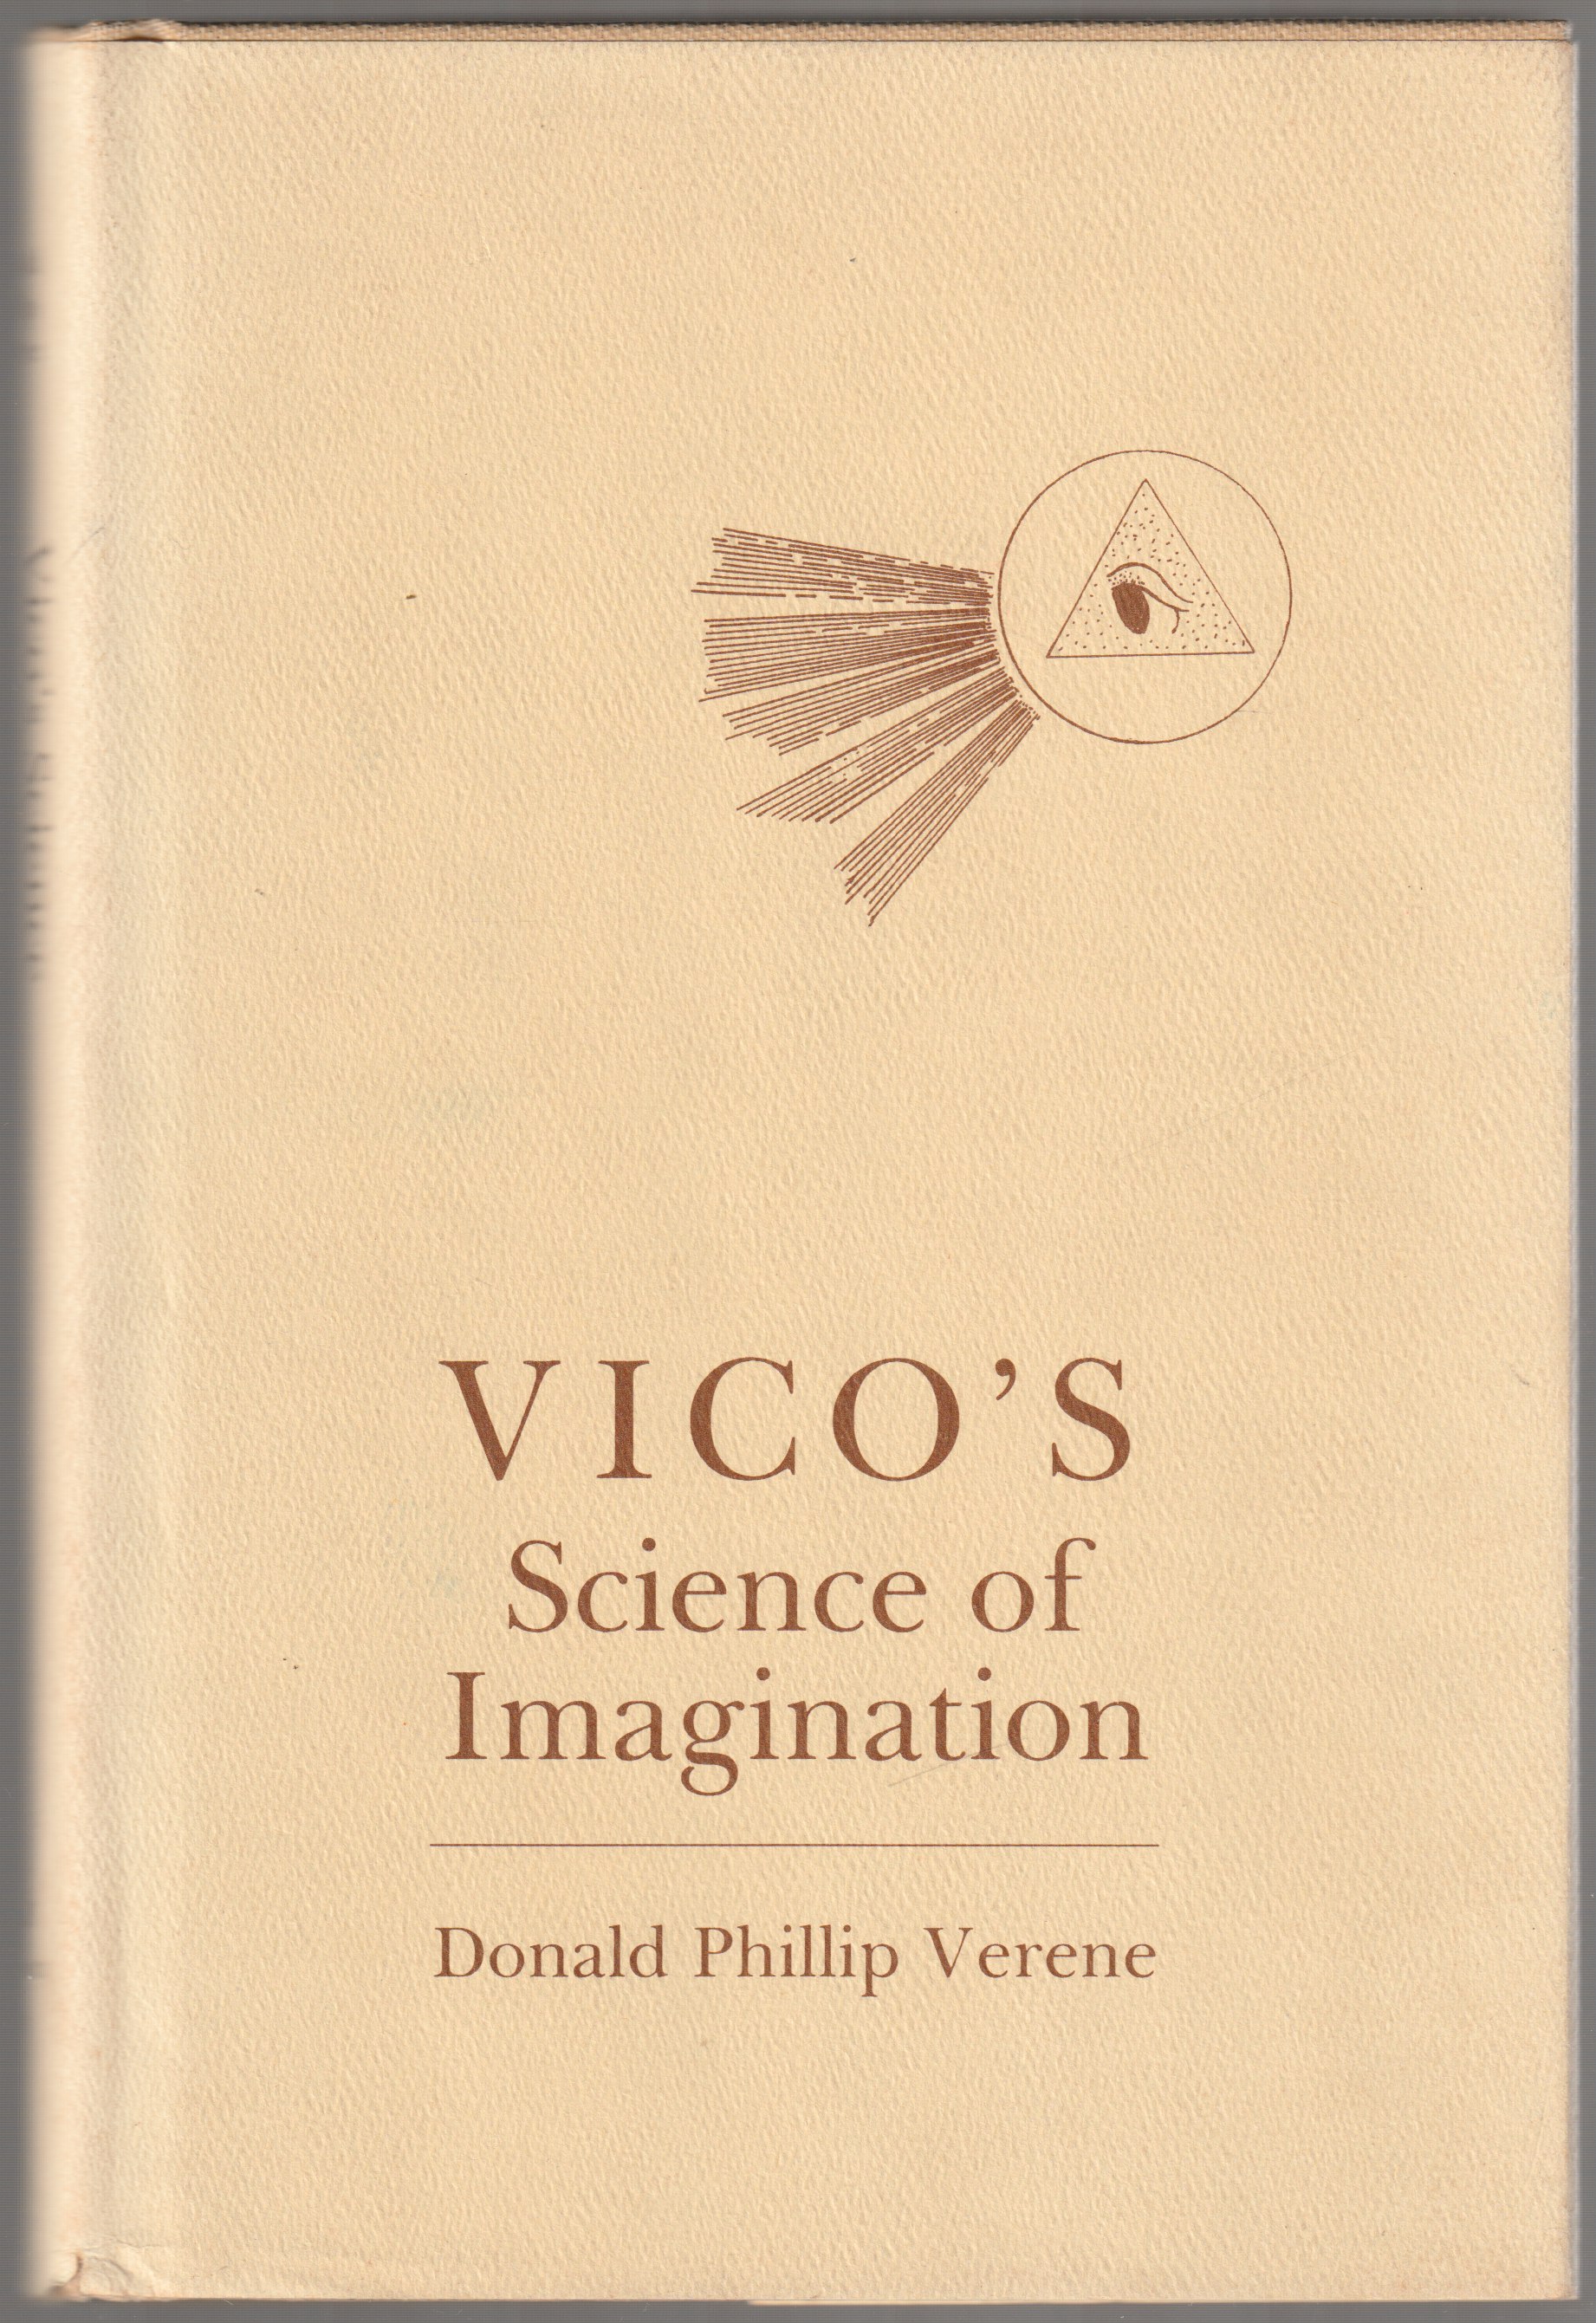 Vico's science of imagination.